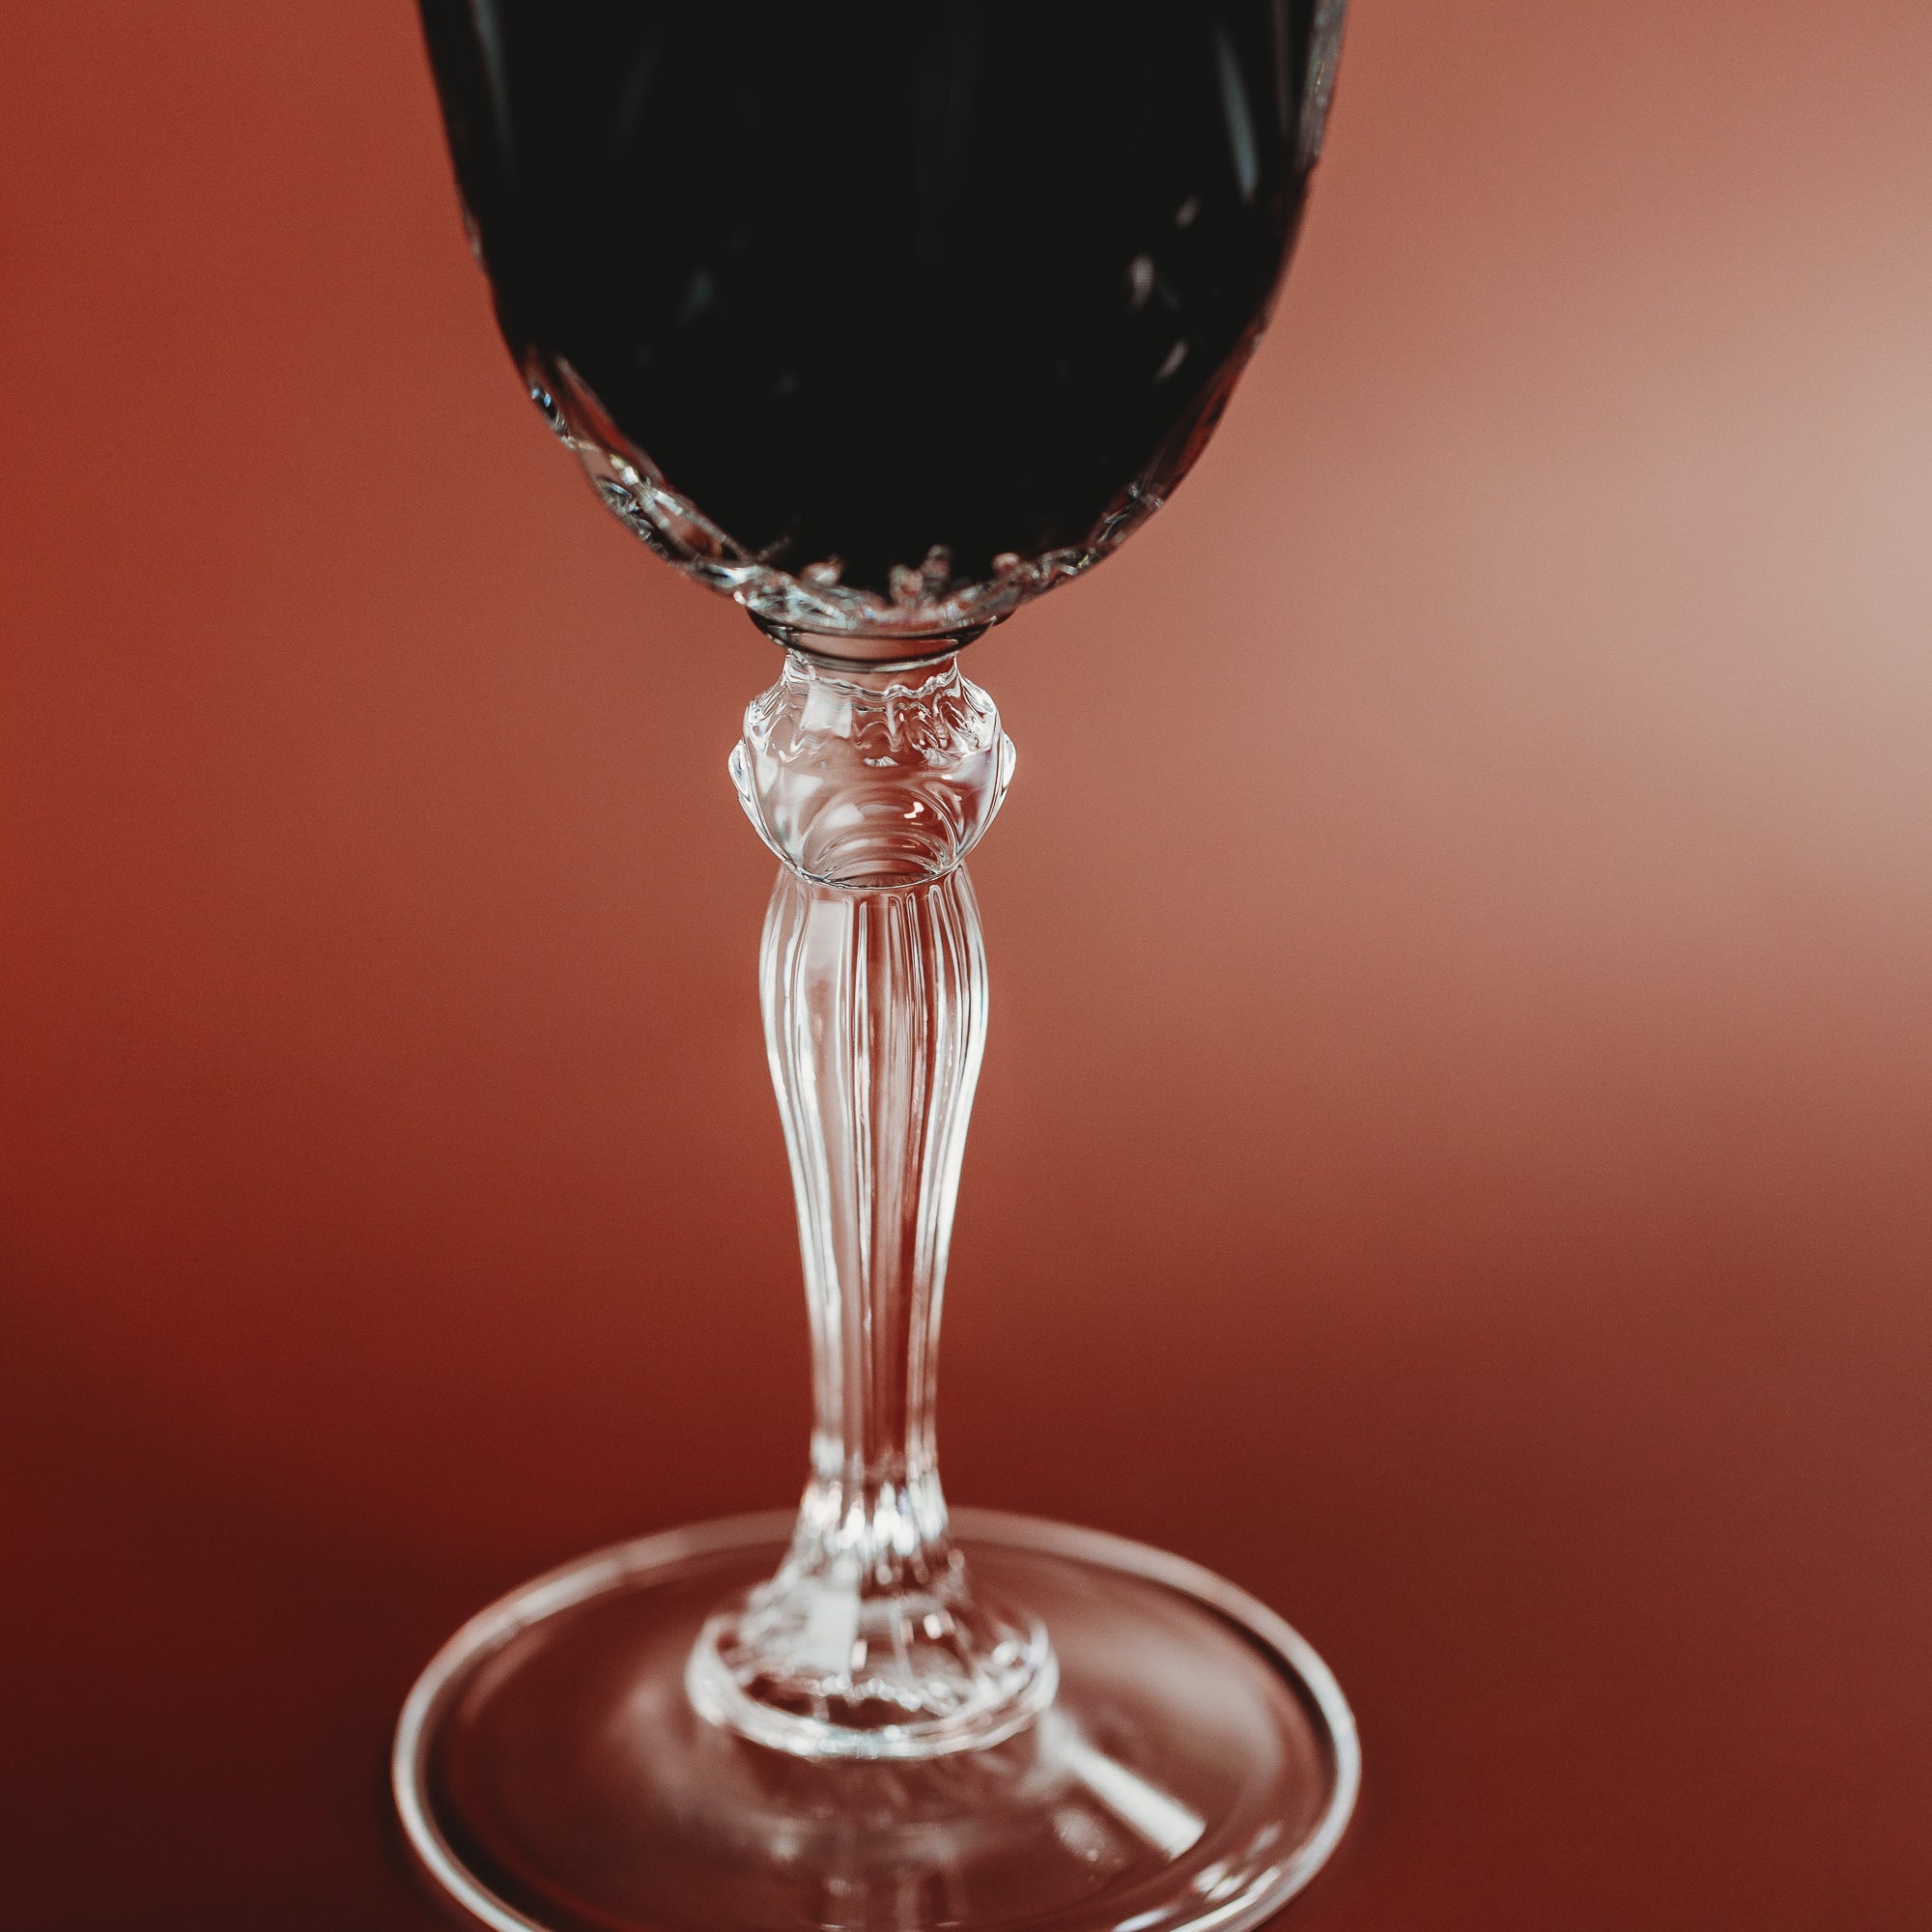 RCR Melodia Red Wine Glasses 270ml - Set of 6 wine glass RCR 